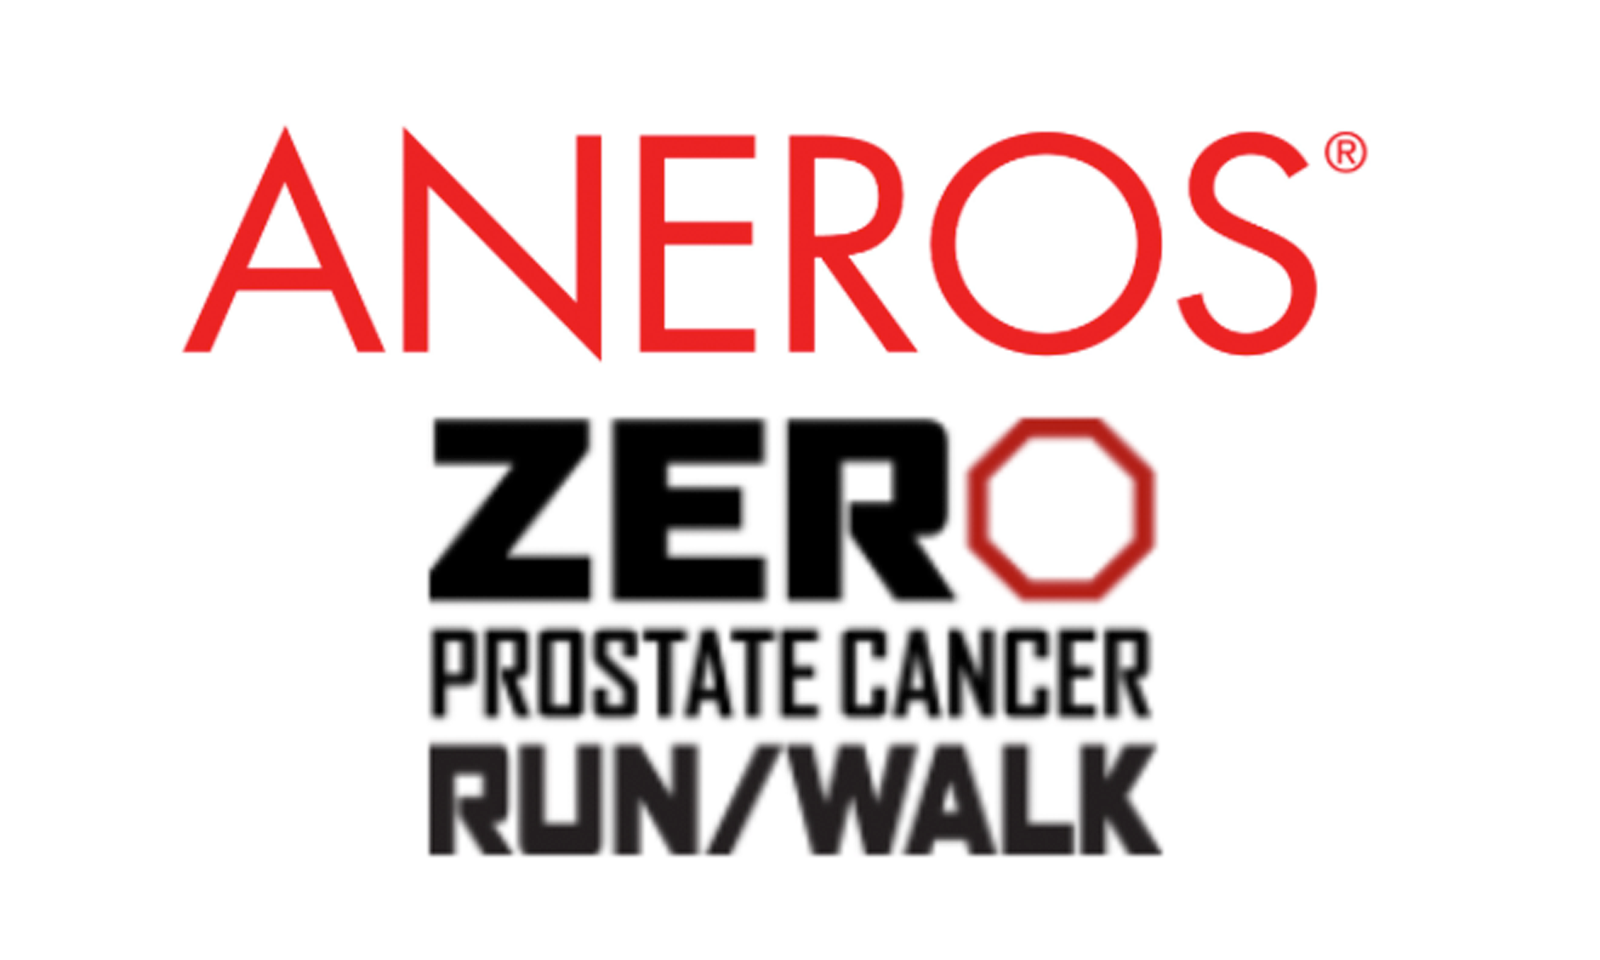 Aneros Fundraising for Prostate Health at ZERO Run/Walk